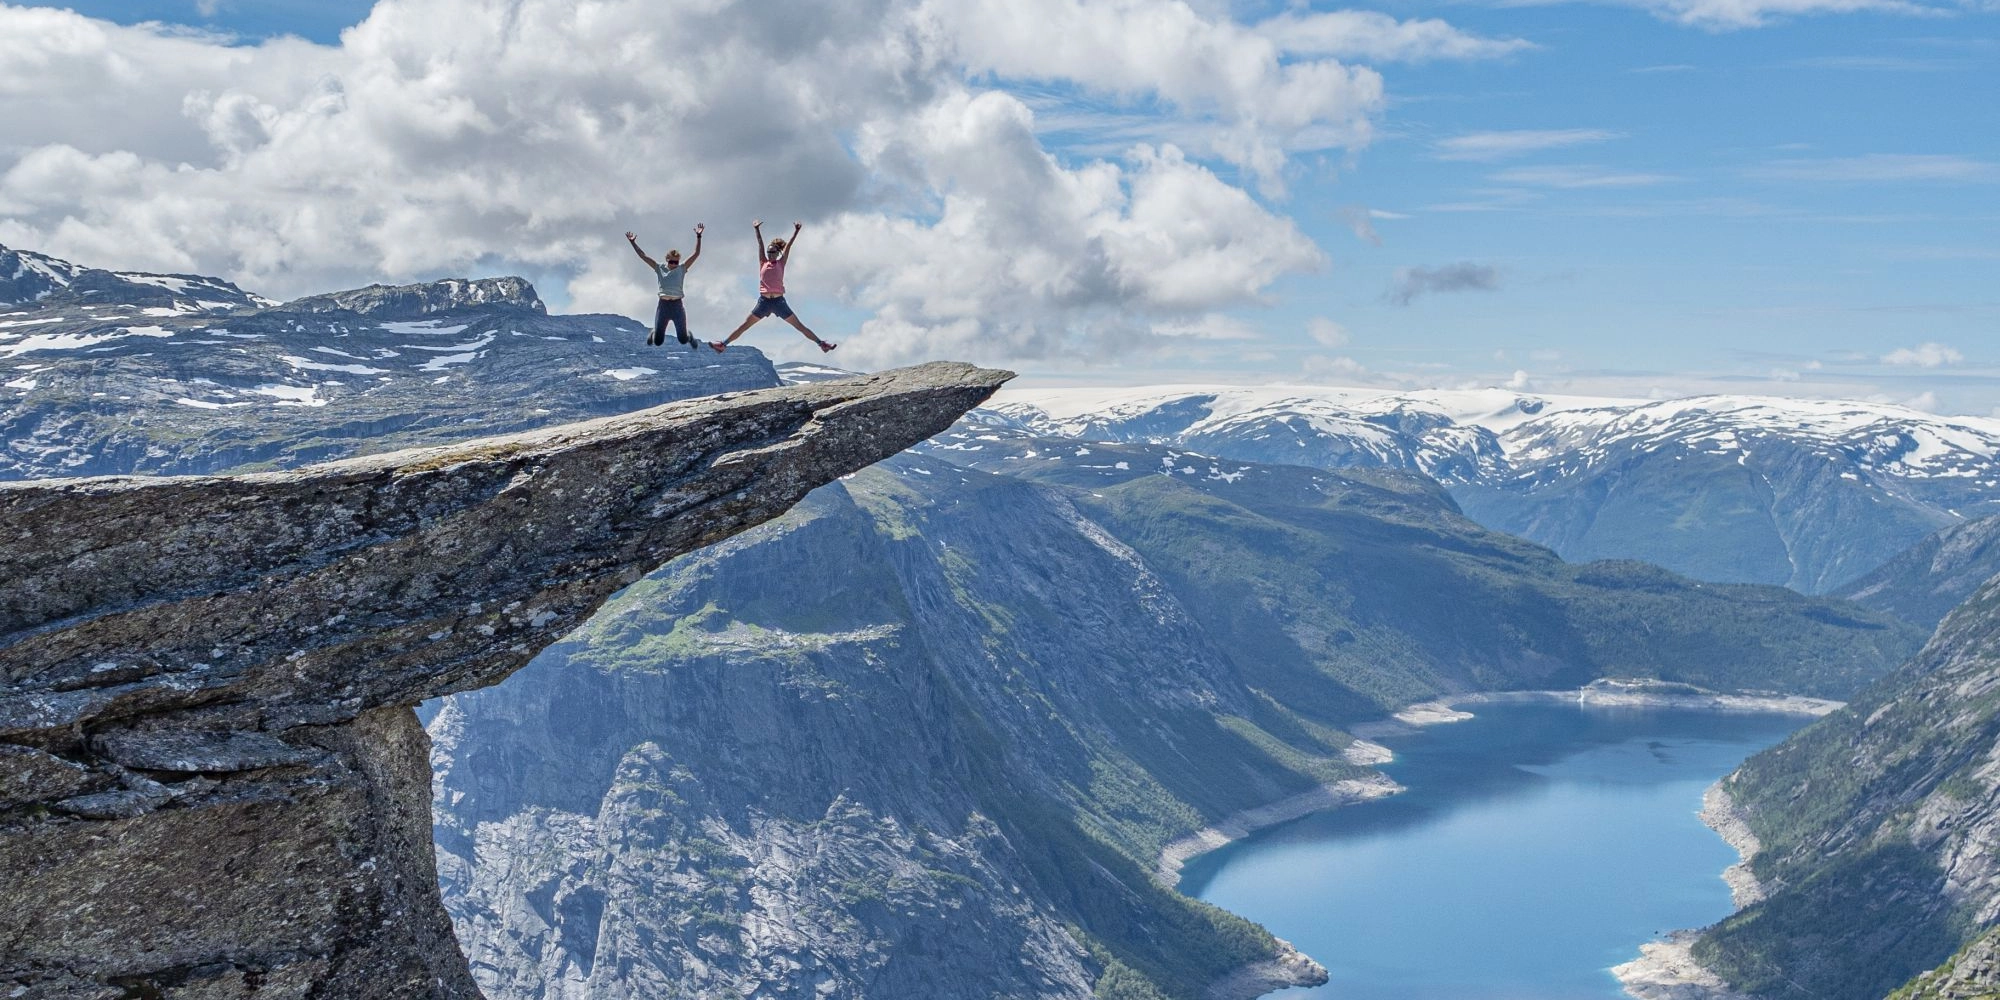  Happy climbers at the top- Trolltunga Via Ferrata glamping tour - Odda, Norway